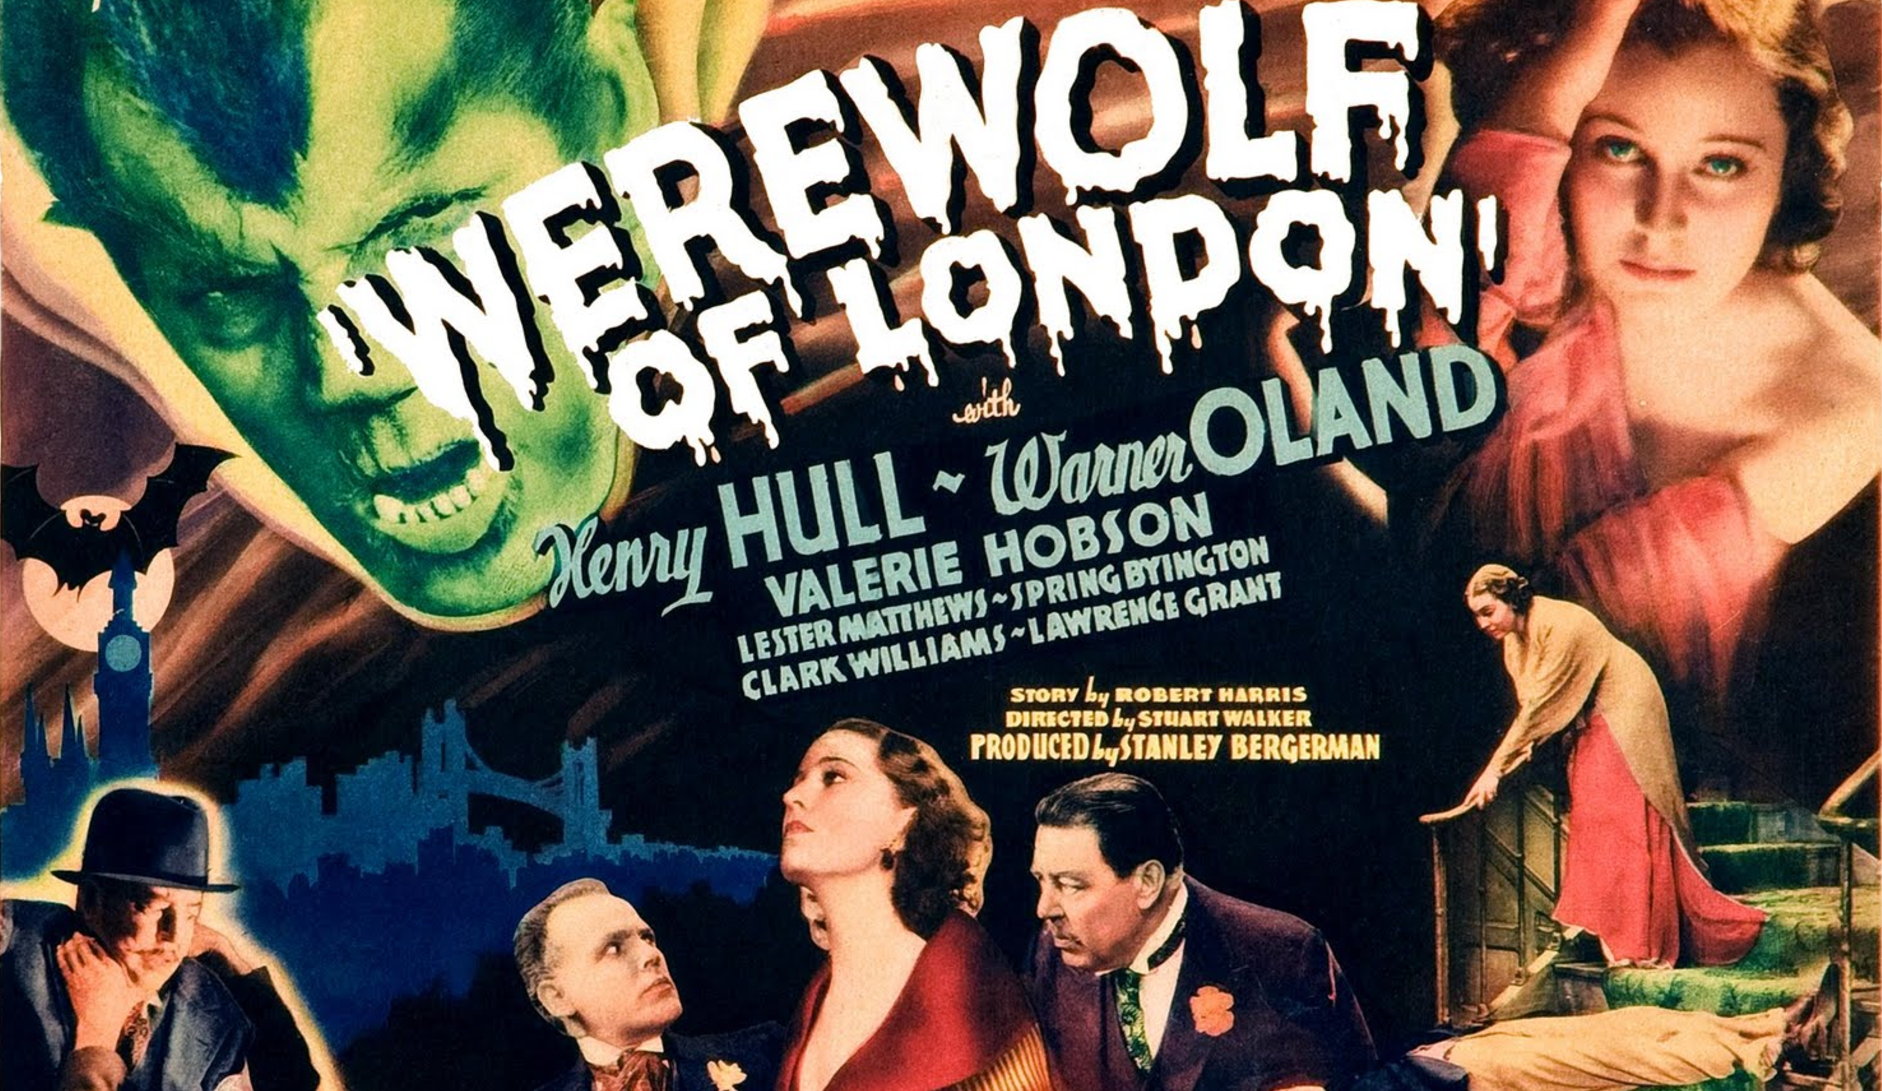 werewolf of london